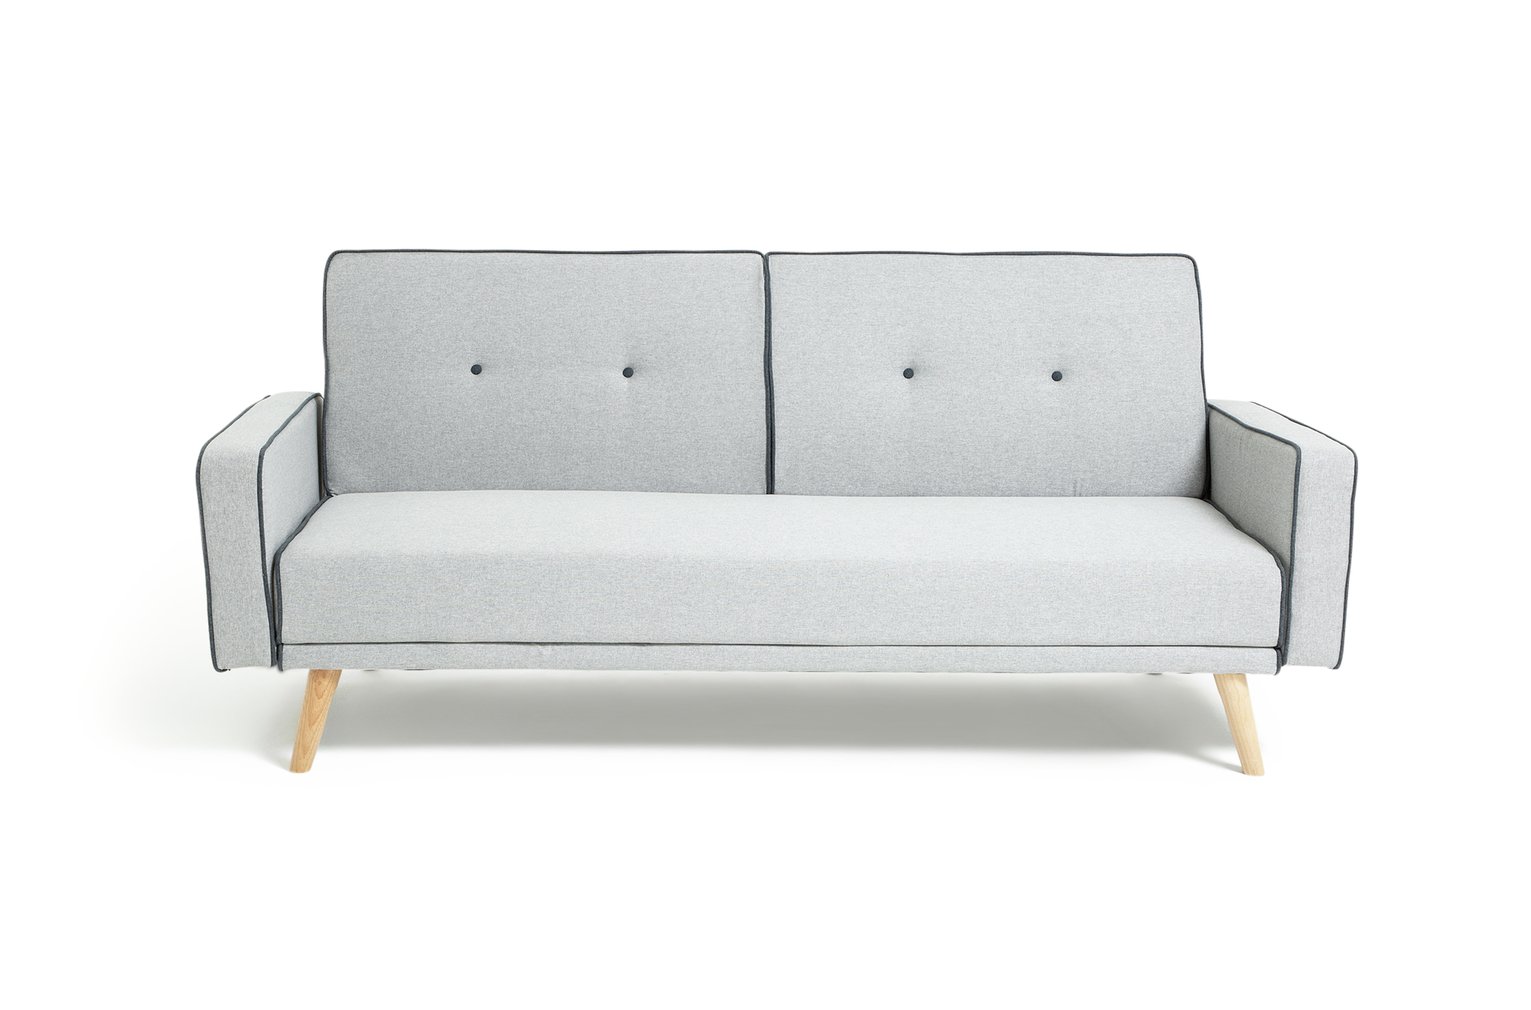 Habitat Frankie 2 Seater Clic Clac Sofa Bed - Grey